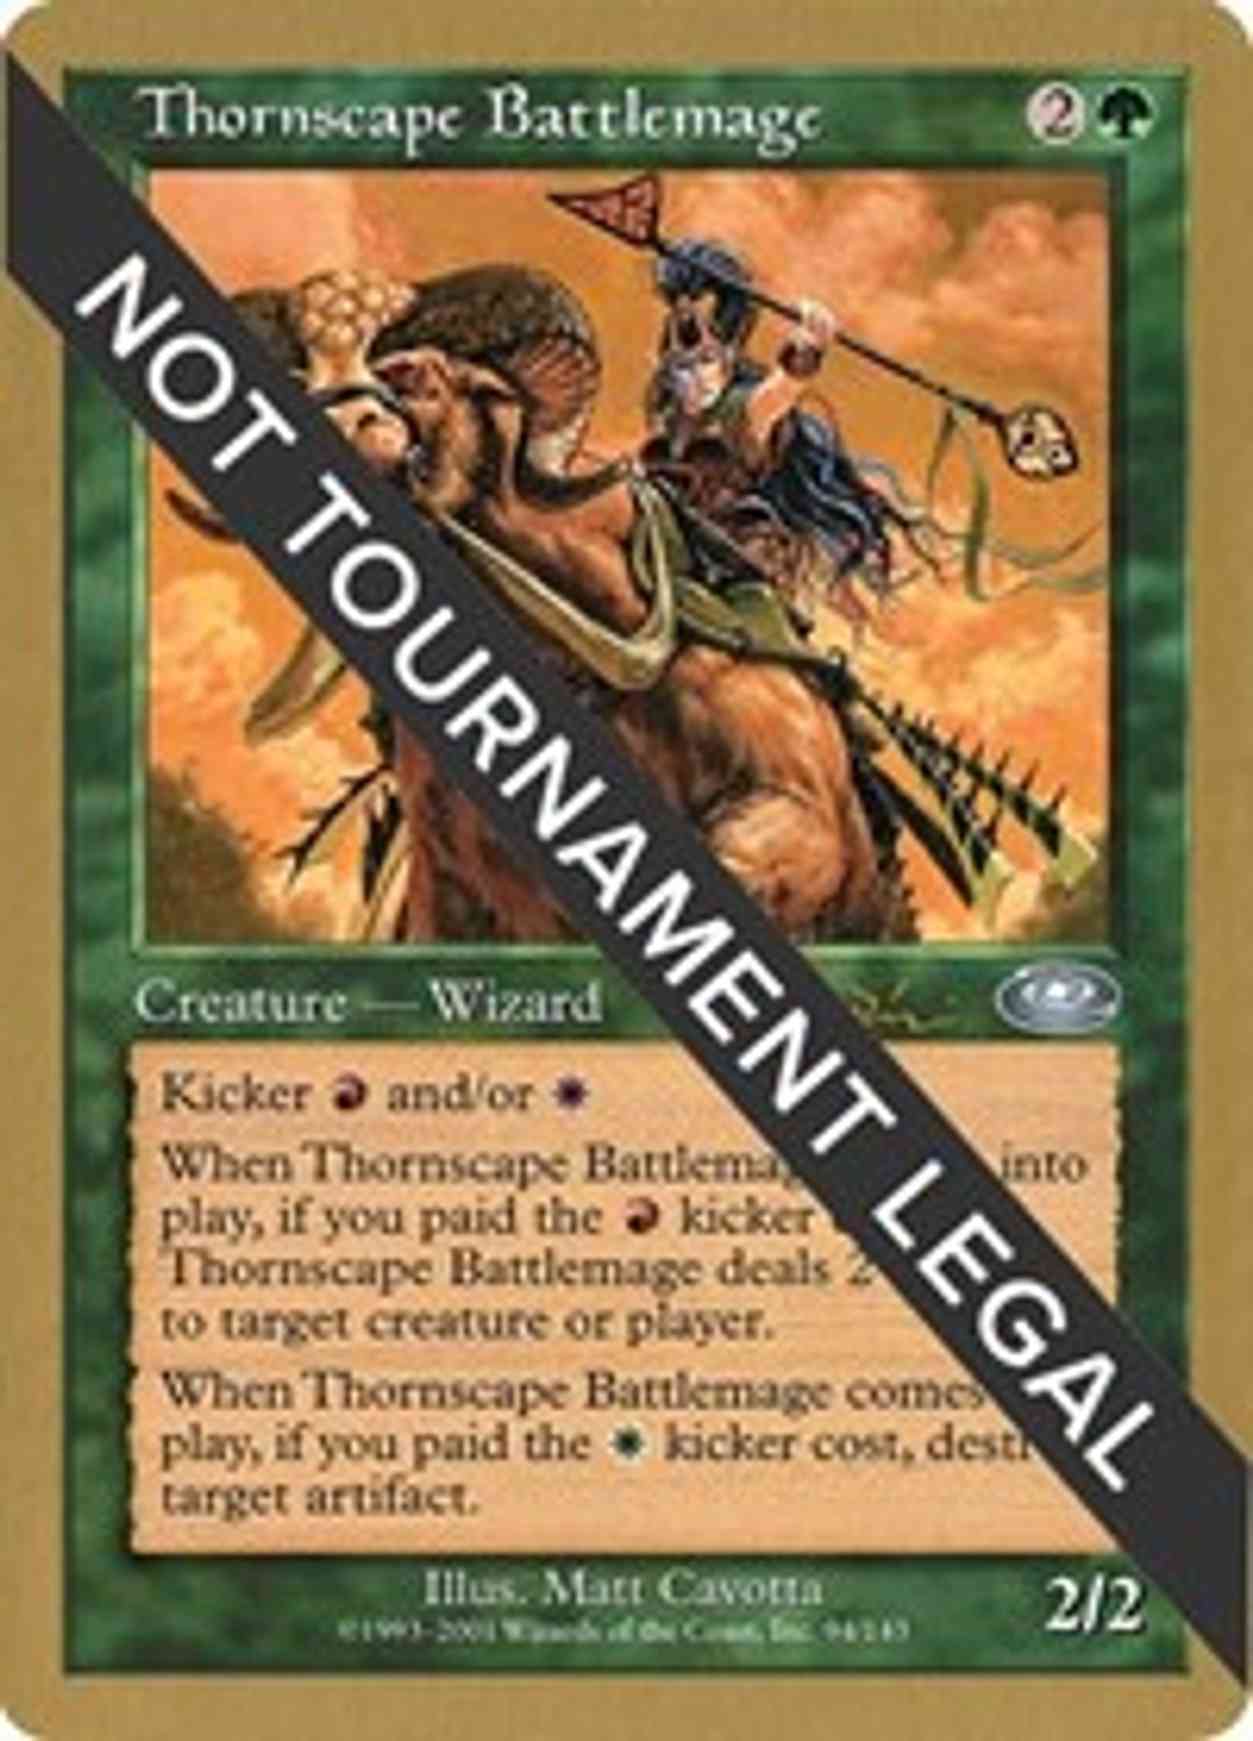 Thornscape Battlemage - 2001 Jan Tomcani (PLS) magic card front